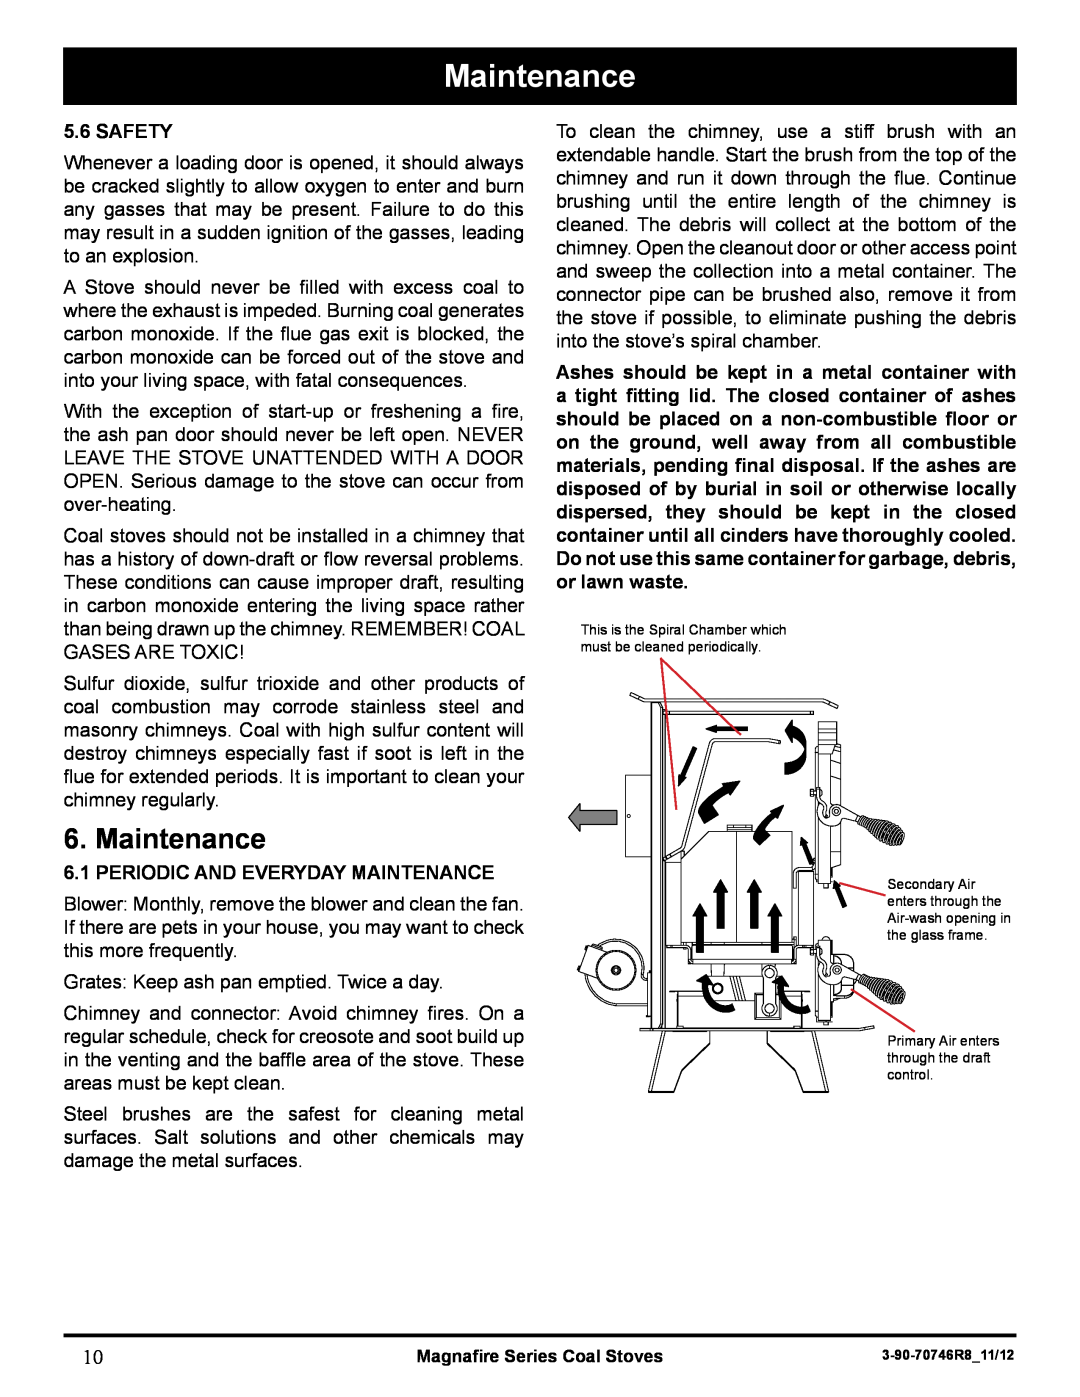 Harman Stove Company MARK III manual Safety, Periodic And Everyday Maintenance 